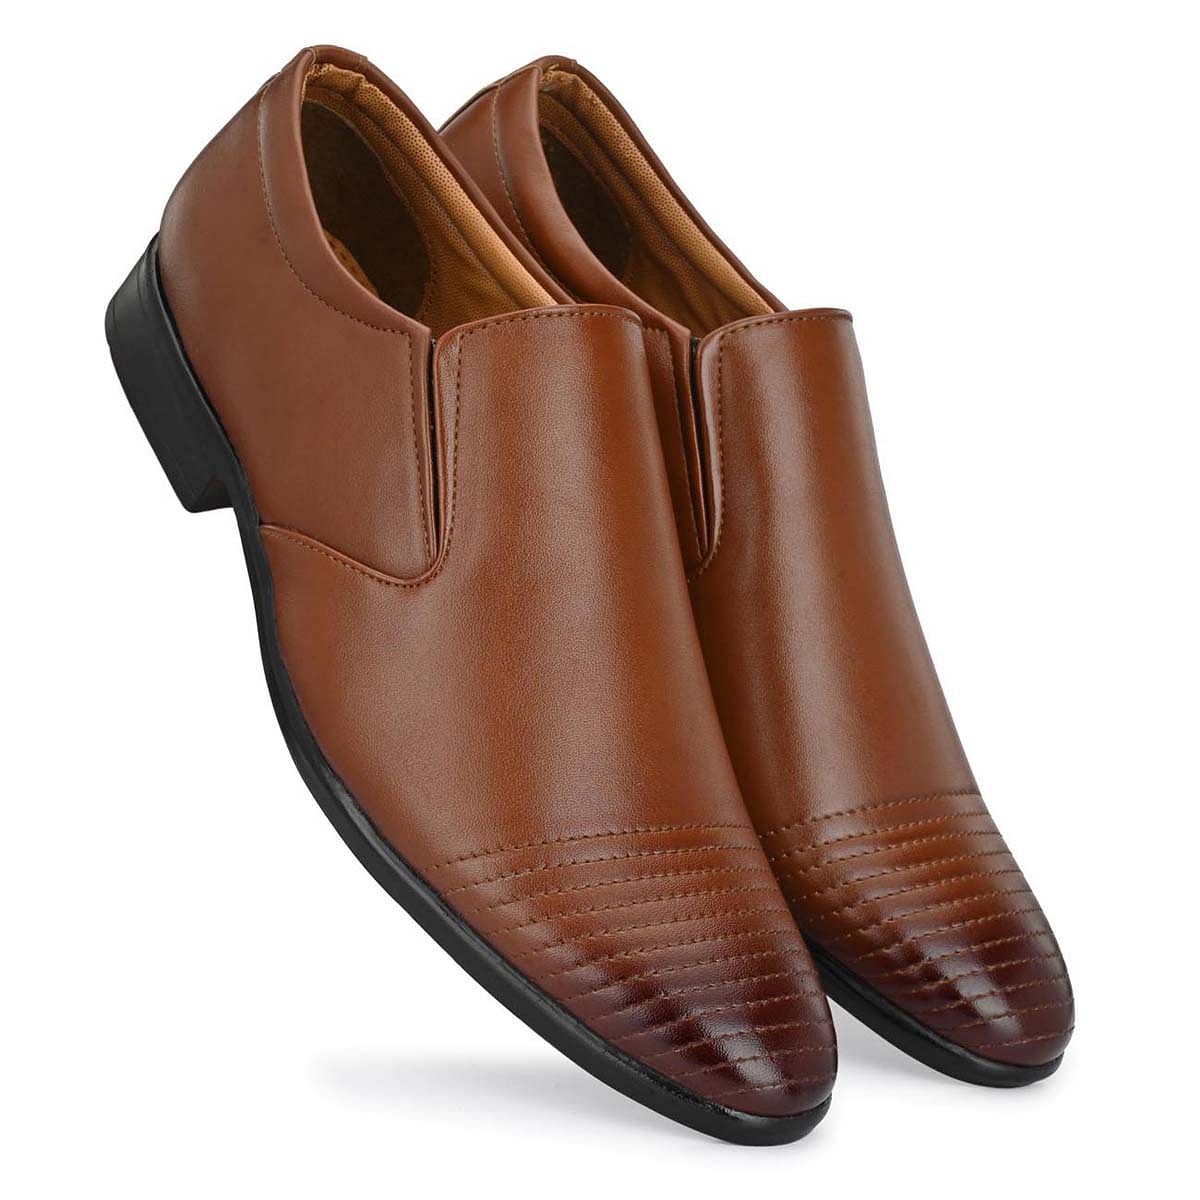 Pair-it Men's Formal Shoes - Tan- LZ-T-FORMAL101